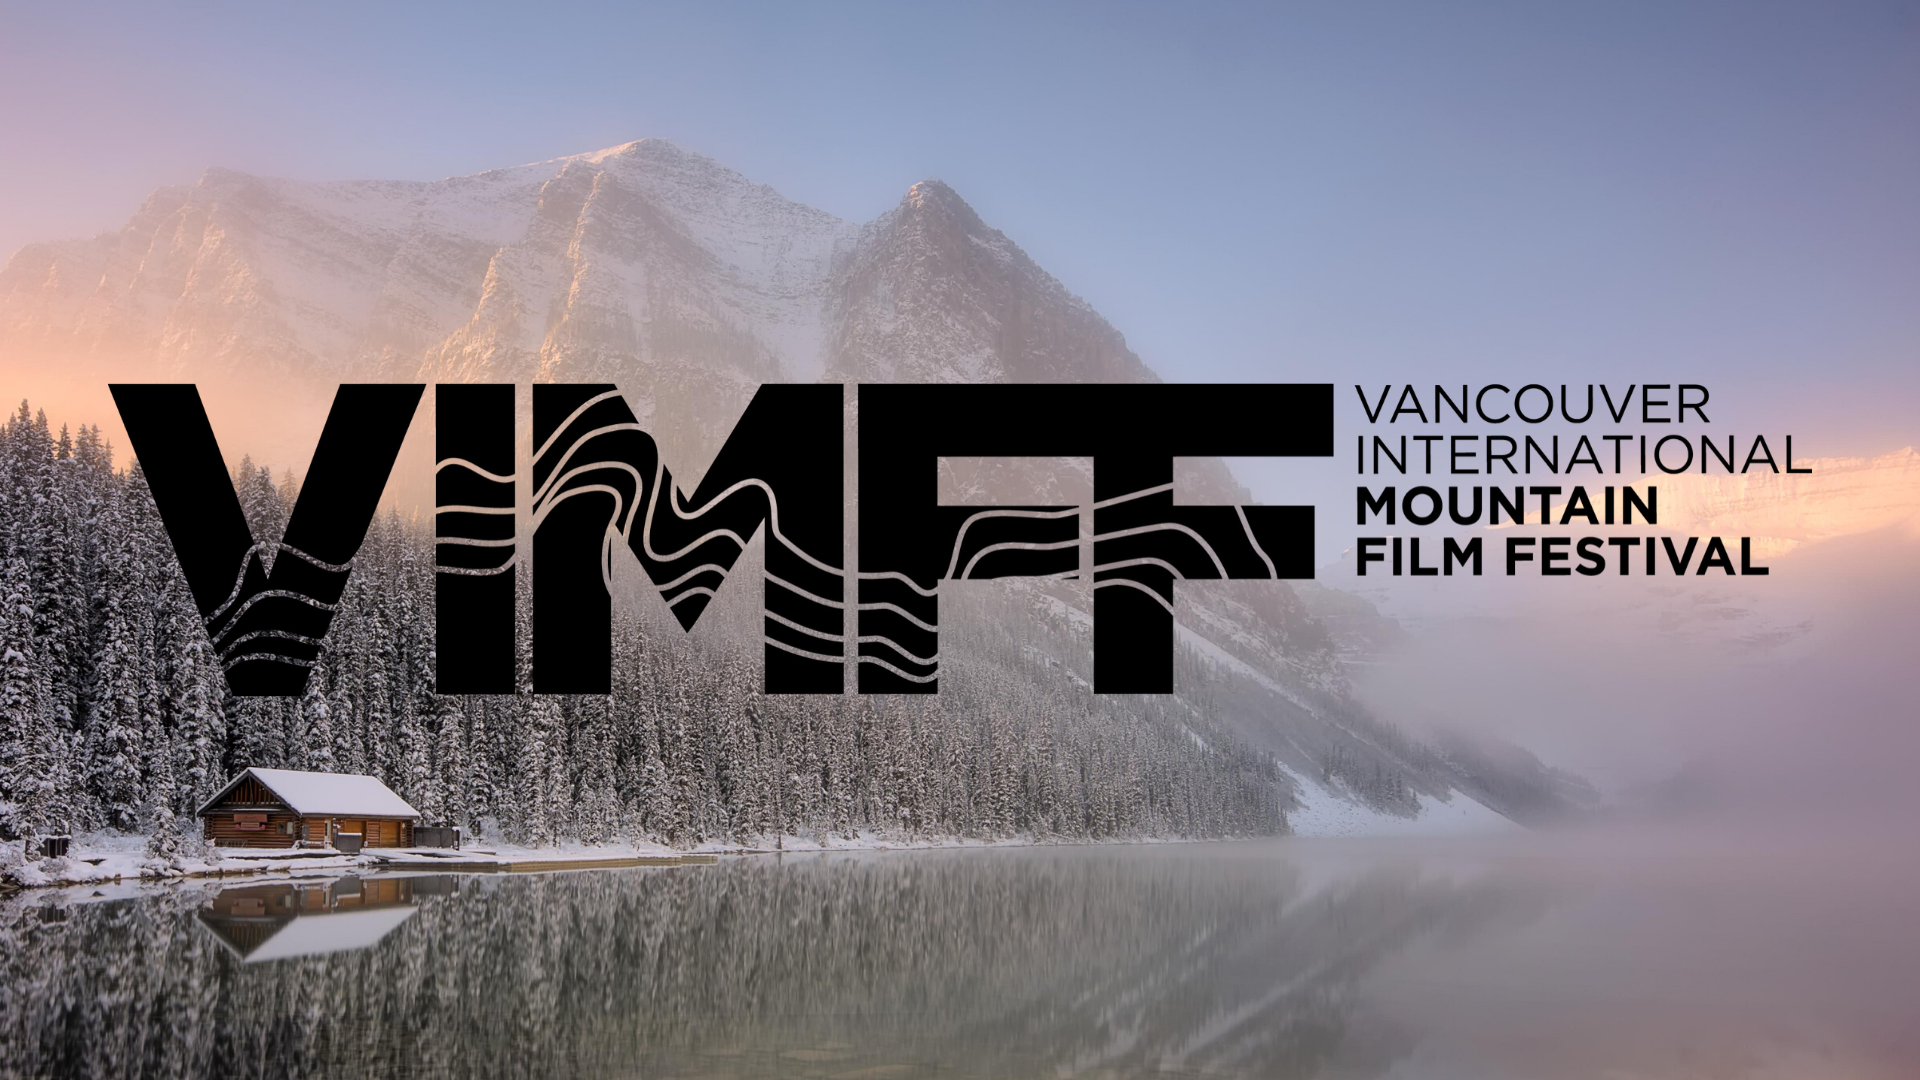 VANCOUVER INTERNATIONAL MOUNTAIN FILM FESTIVAL - BEST OF THE FEST TOUR